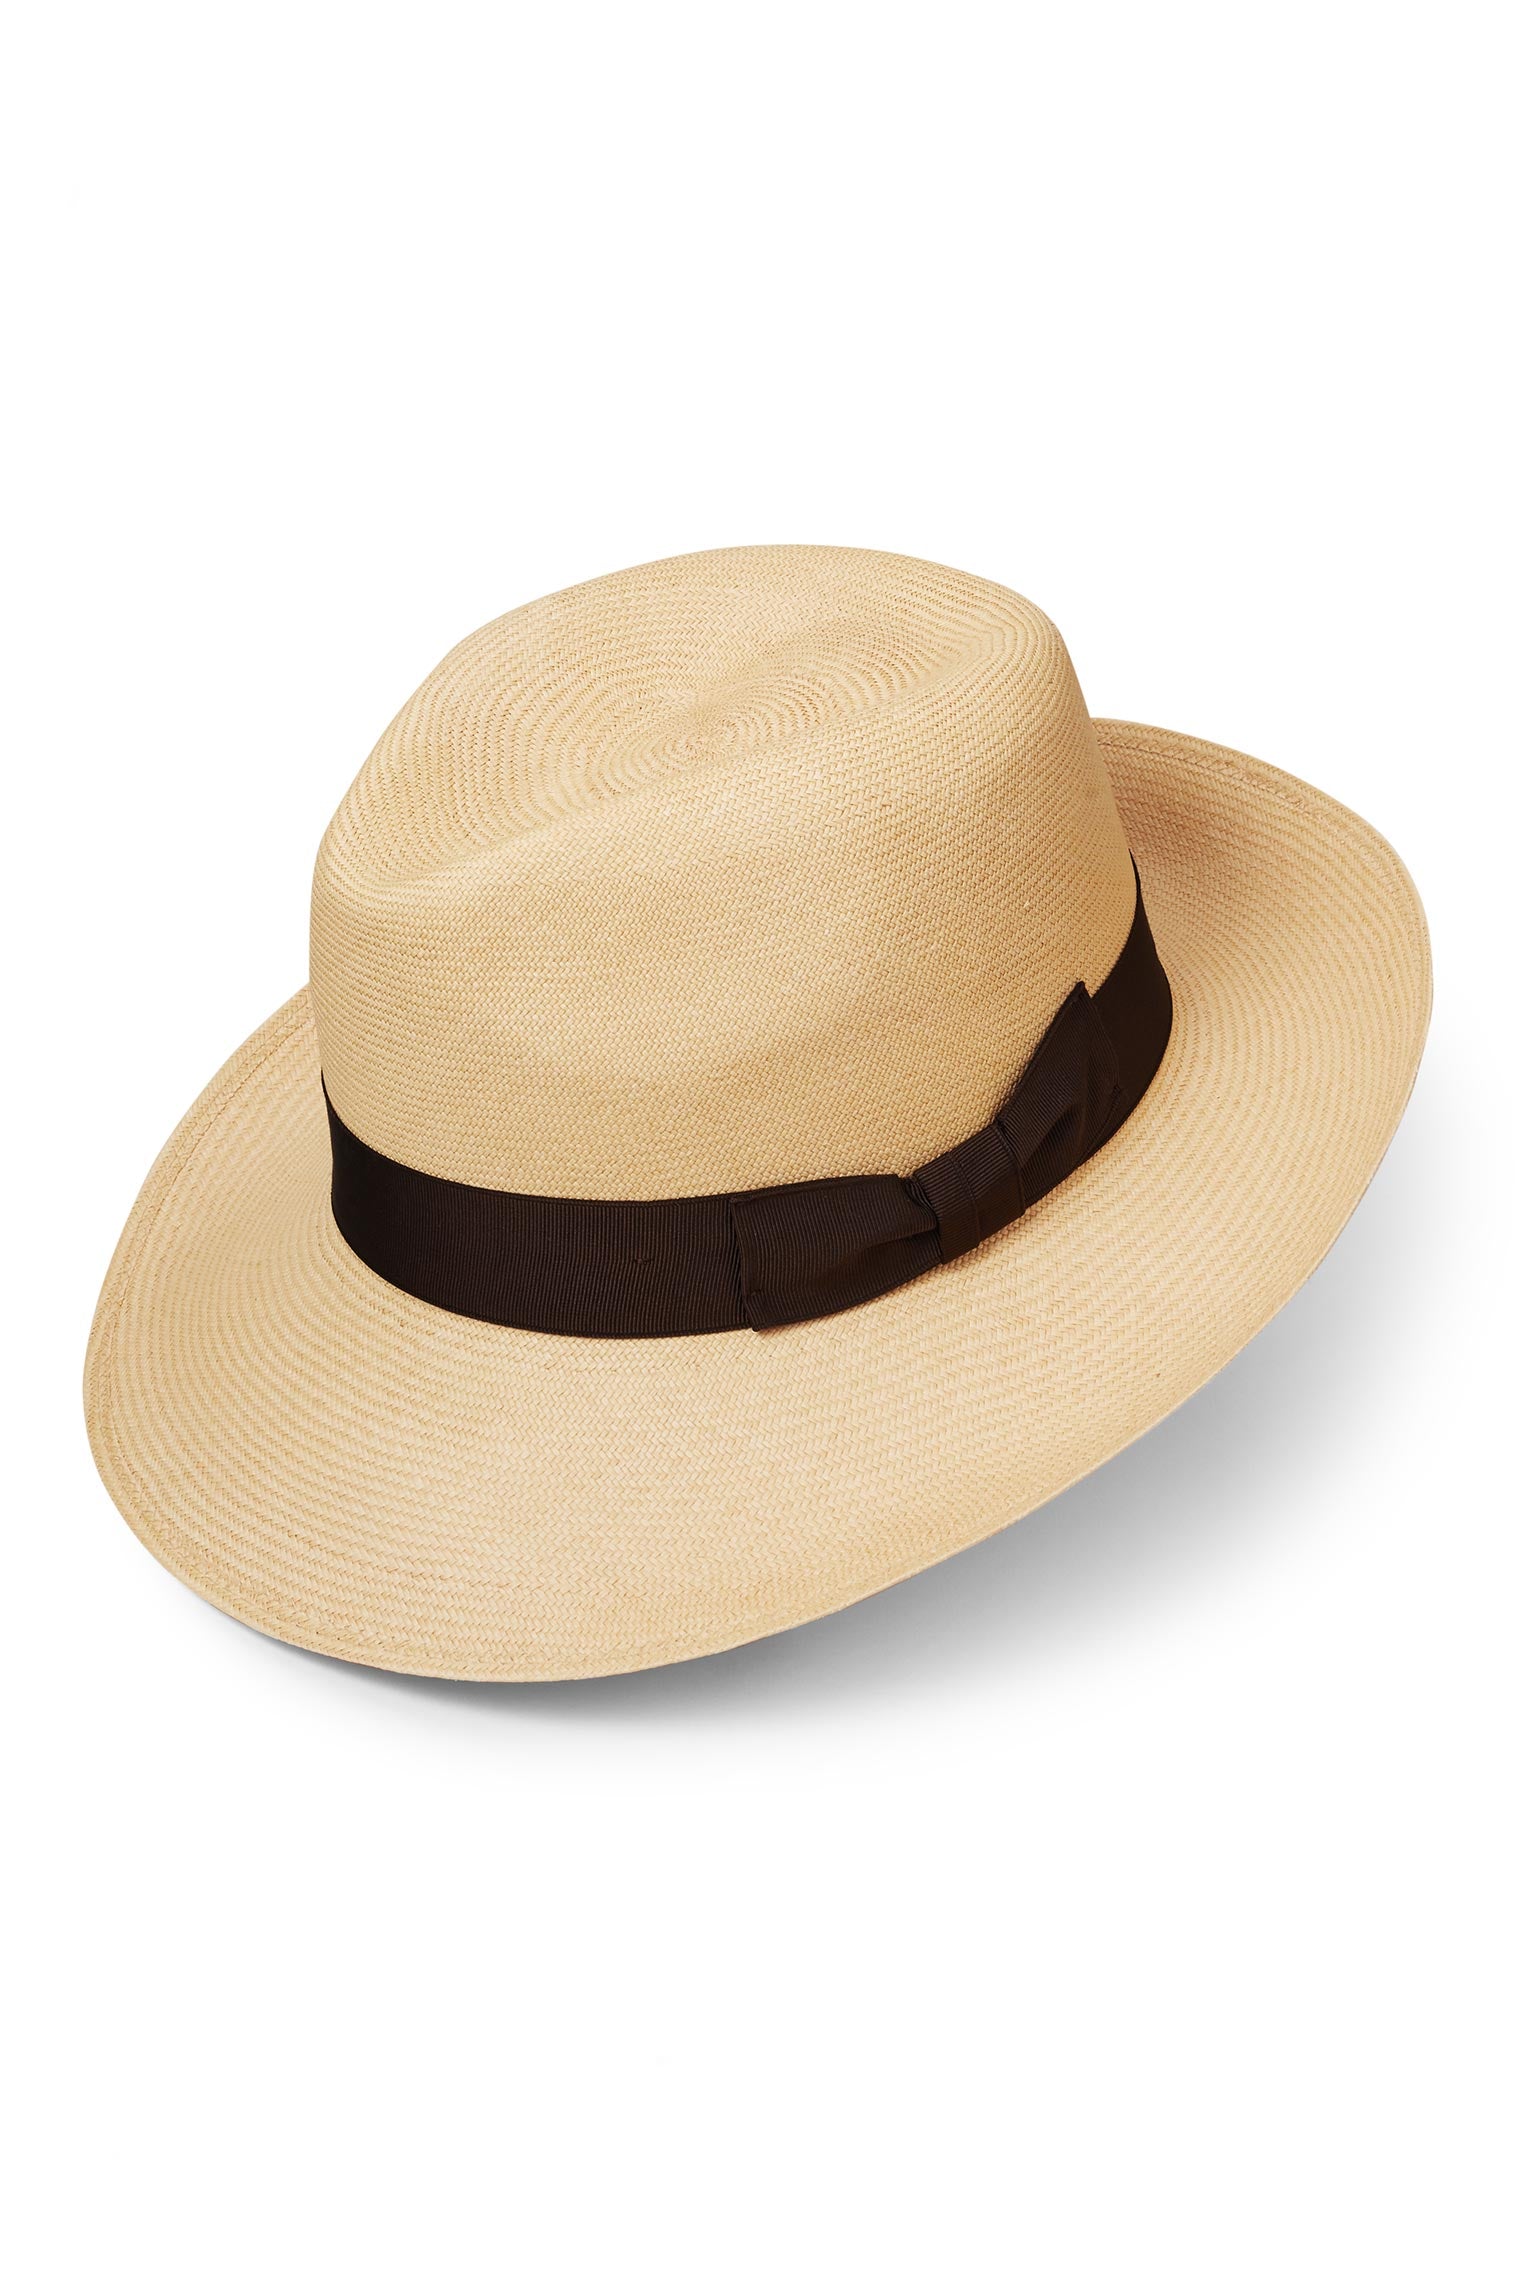 Ventnor Cuenca Ultra-fino Panama - Panamas and Sun Hats for Men - Lock & Co. Hatters London UK